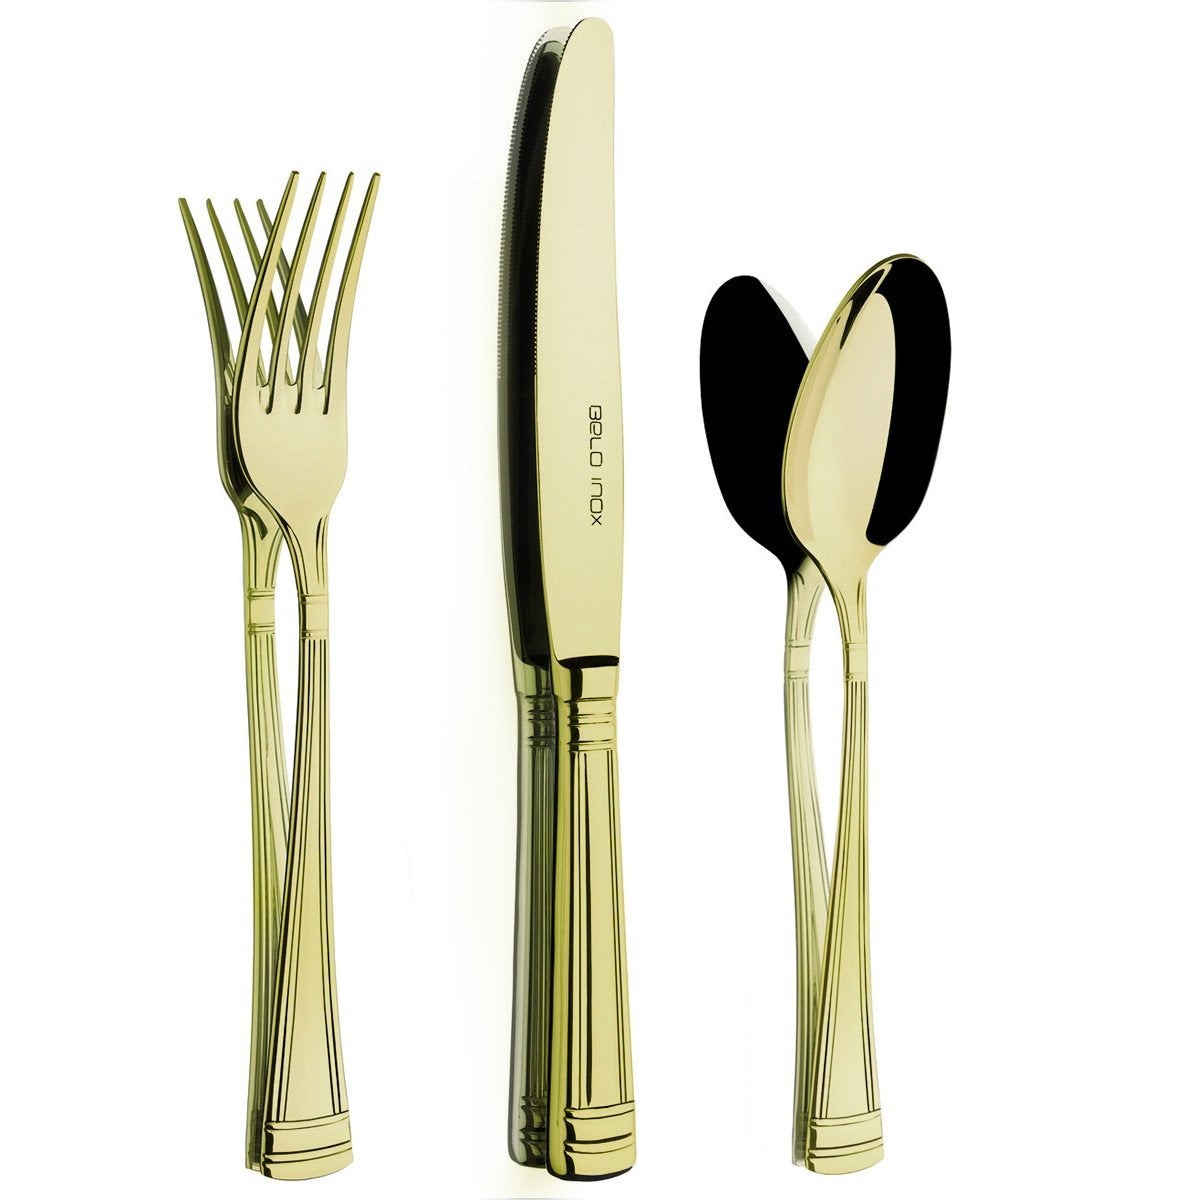 Belo Inox Belo 4 GOLD 24 Pieces Cutlery Set